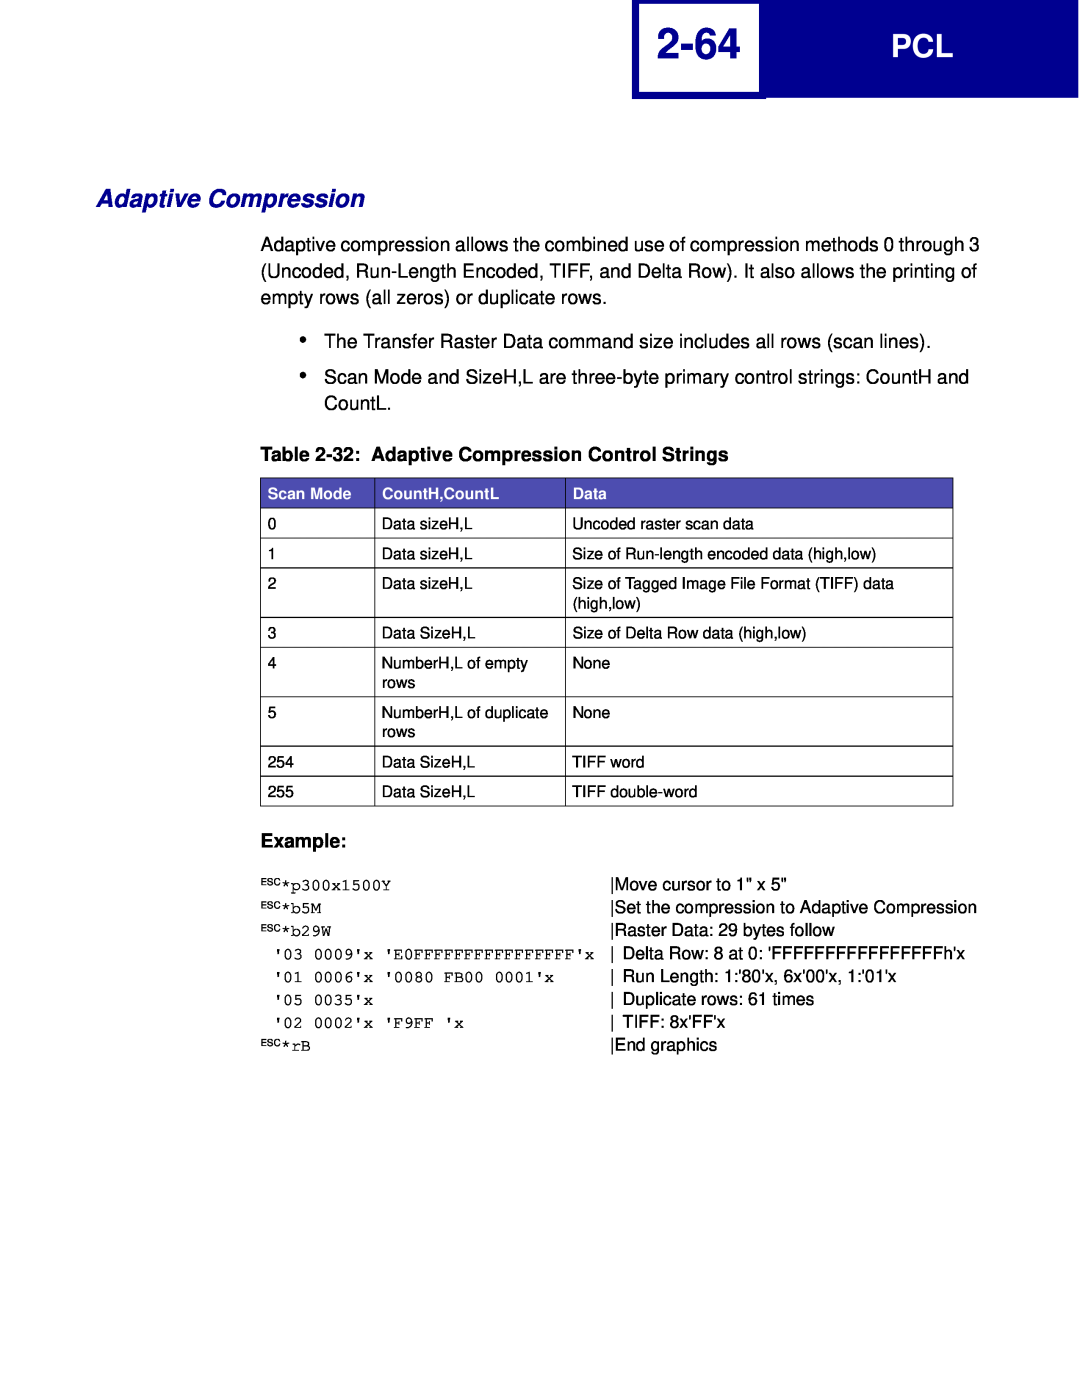 Lexmark C760, C762 manual 2-64, 32 Adaptive Compression Control Strings, Example 